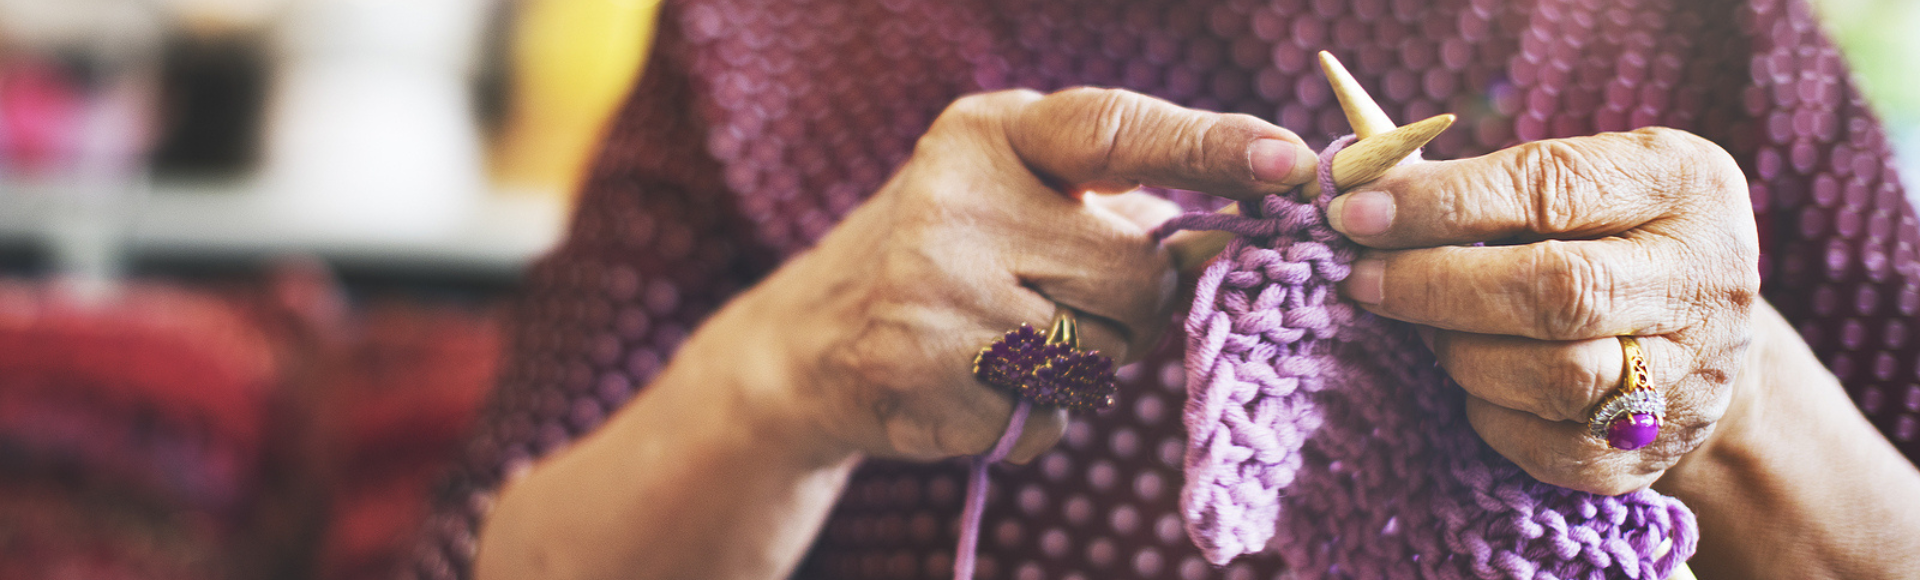 Hands knitting purple scarf